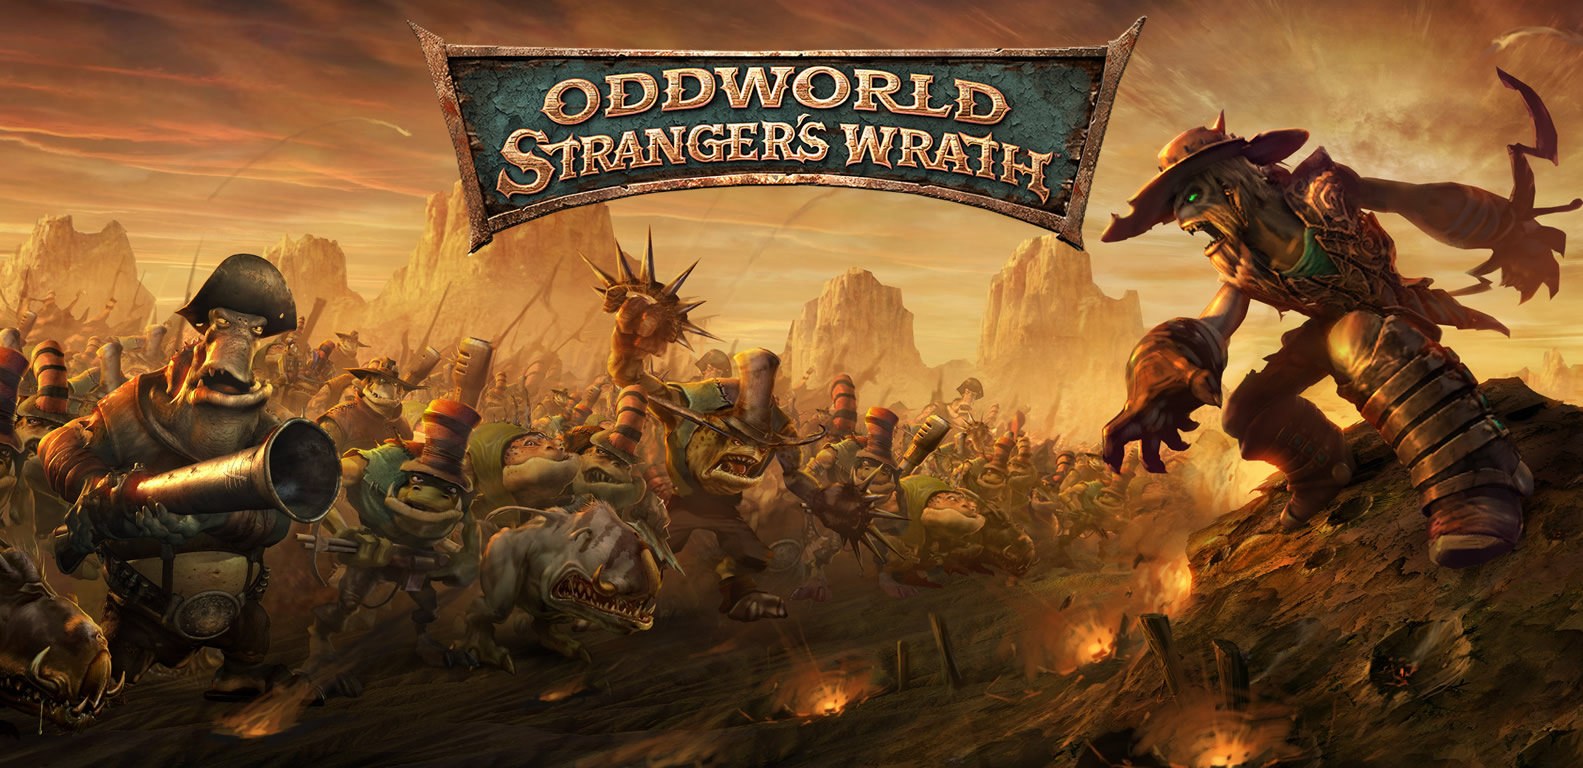 Oddworld Strangers Wrath Review